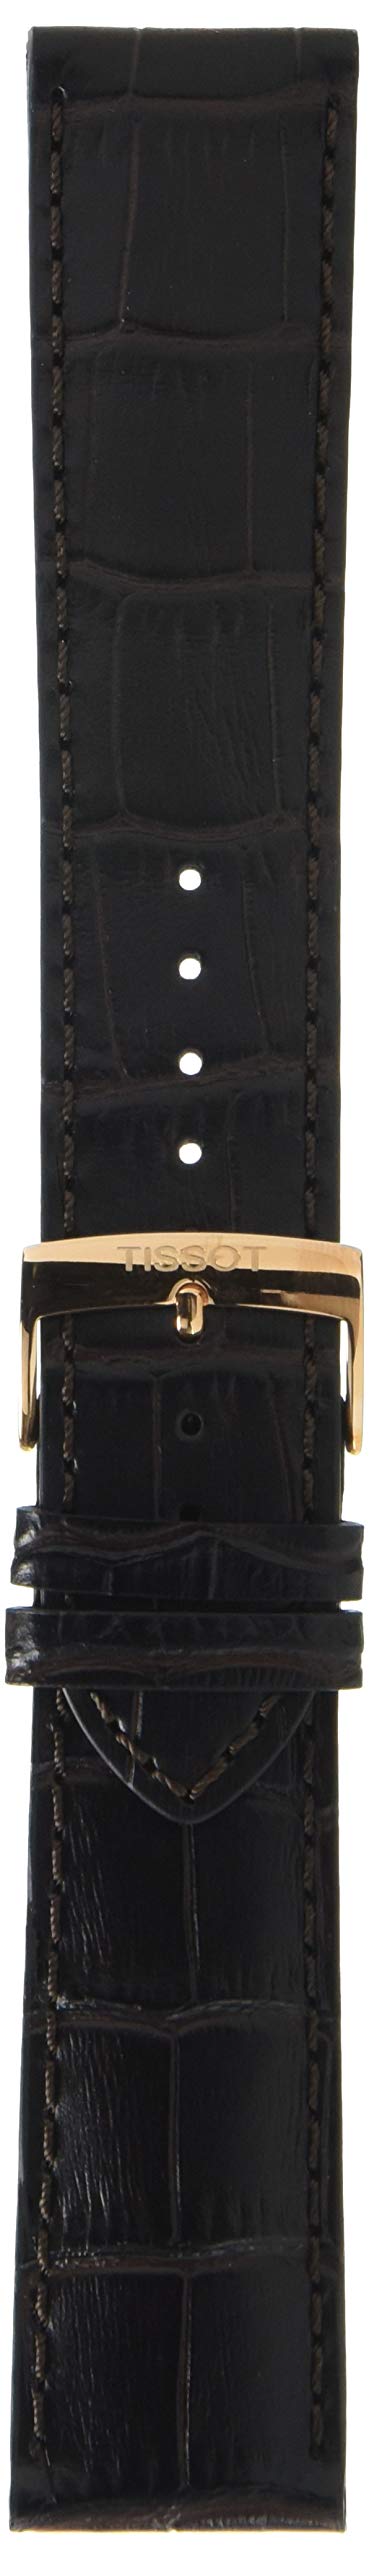 Tissot unisex-adult Leather Calfskin Watch Strap Brown T600041656